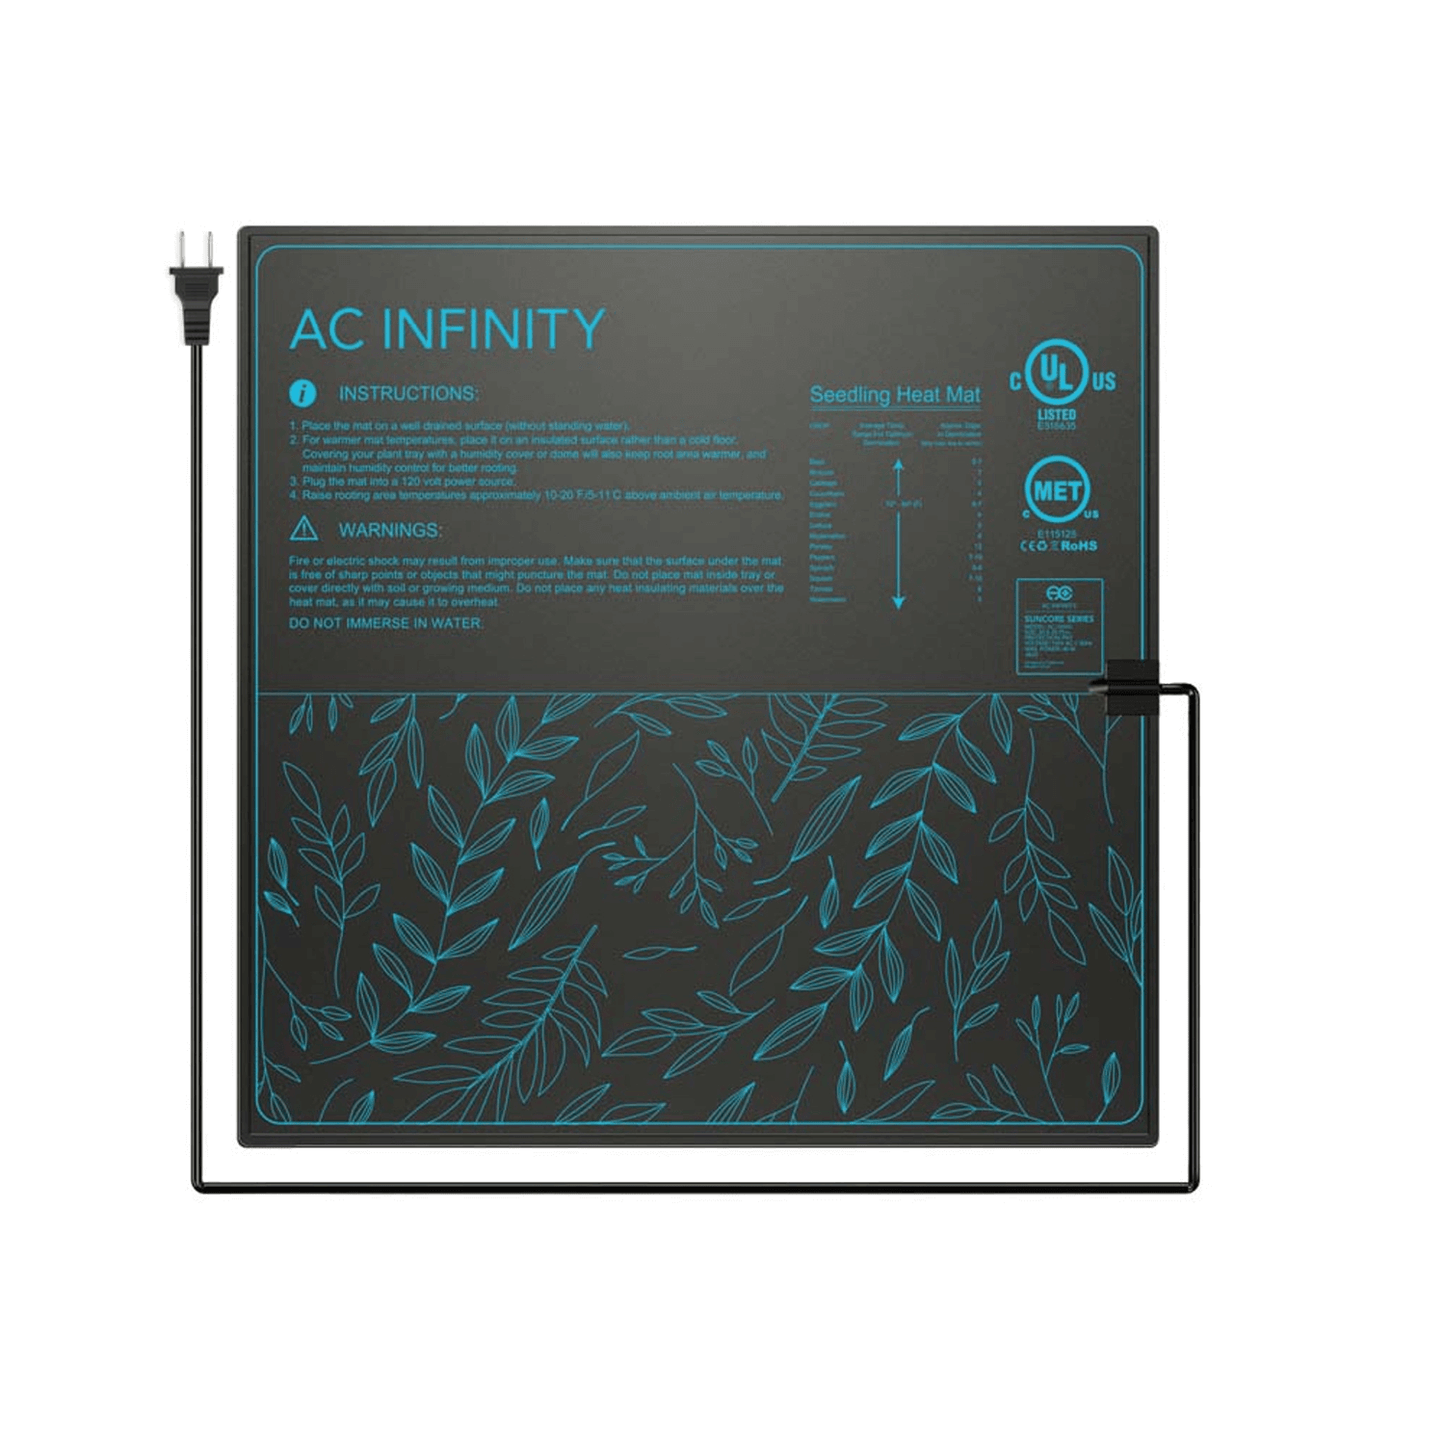 AC Infinity SUNCORE A5, Seedling Heat Mat, IP-67 Waterproof, 20" x 20.75" AC-SMA5 Planting & Watering 819137021181